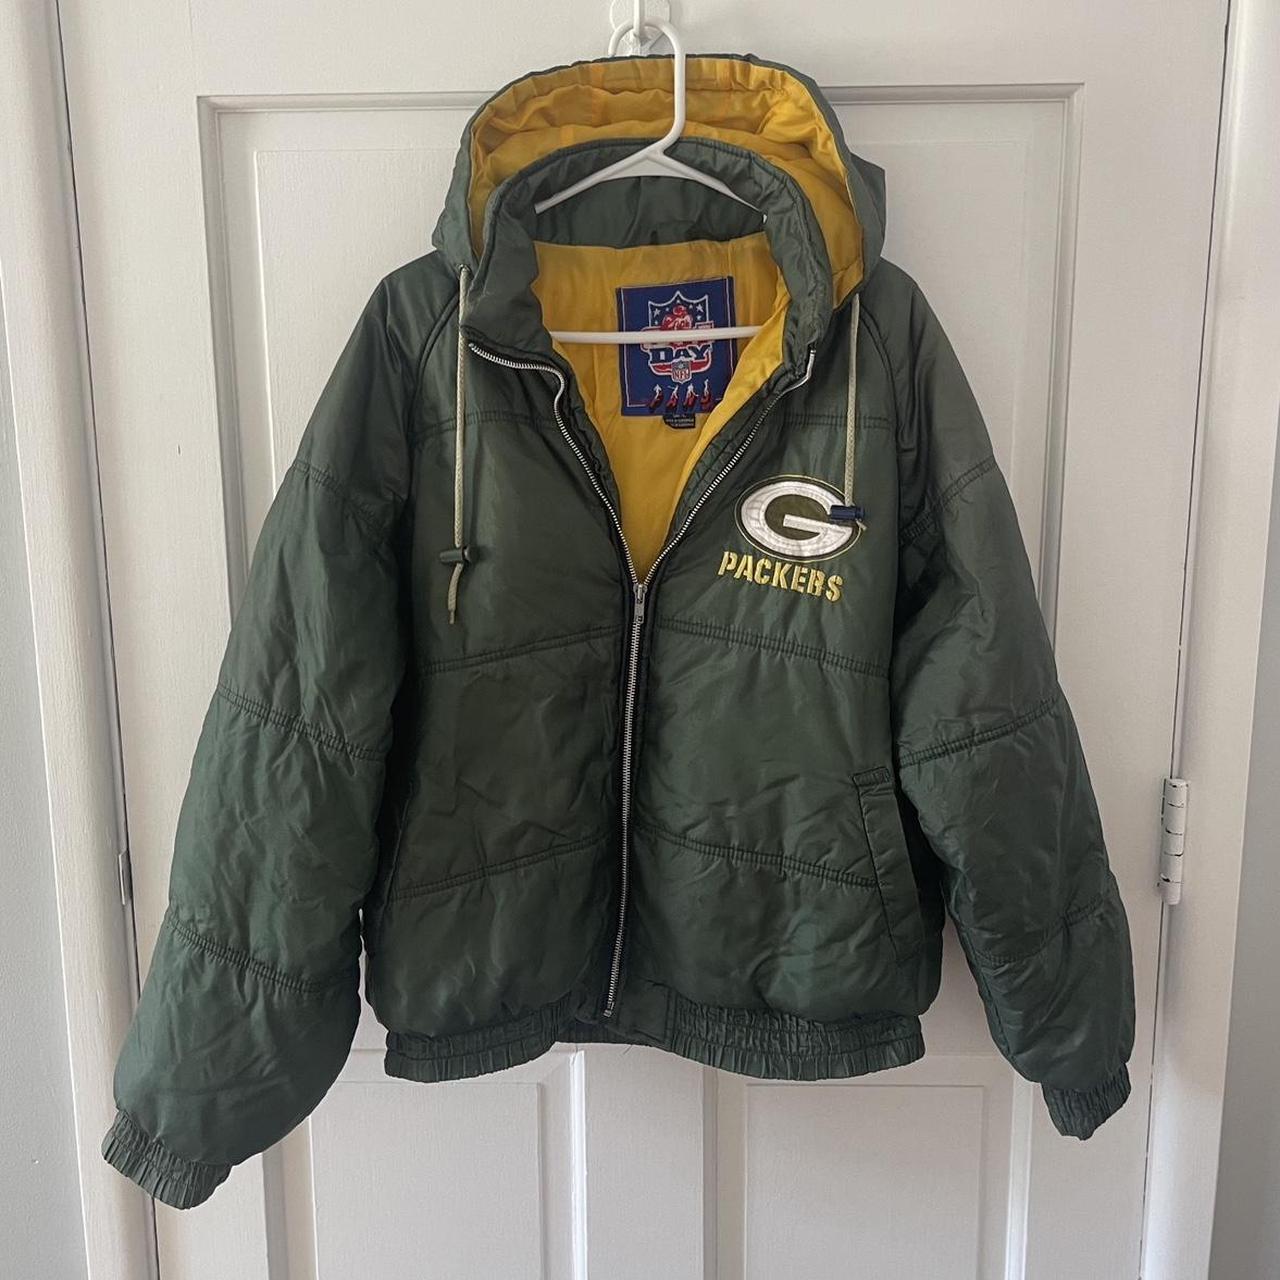 NFL Vintage Green Bay Packers Shirt - William Jacket